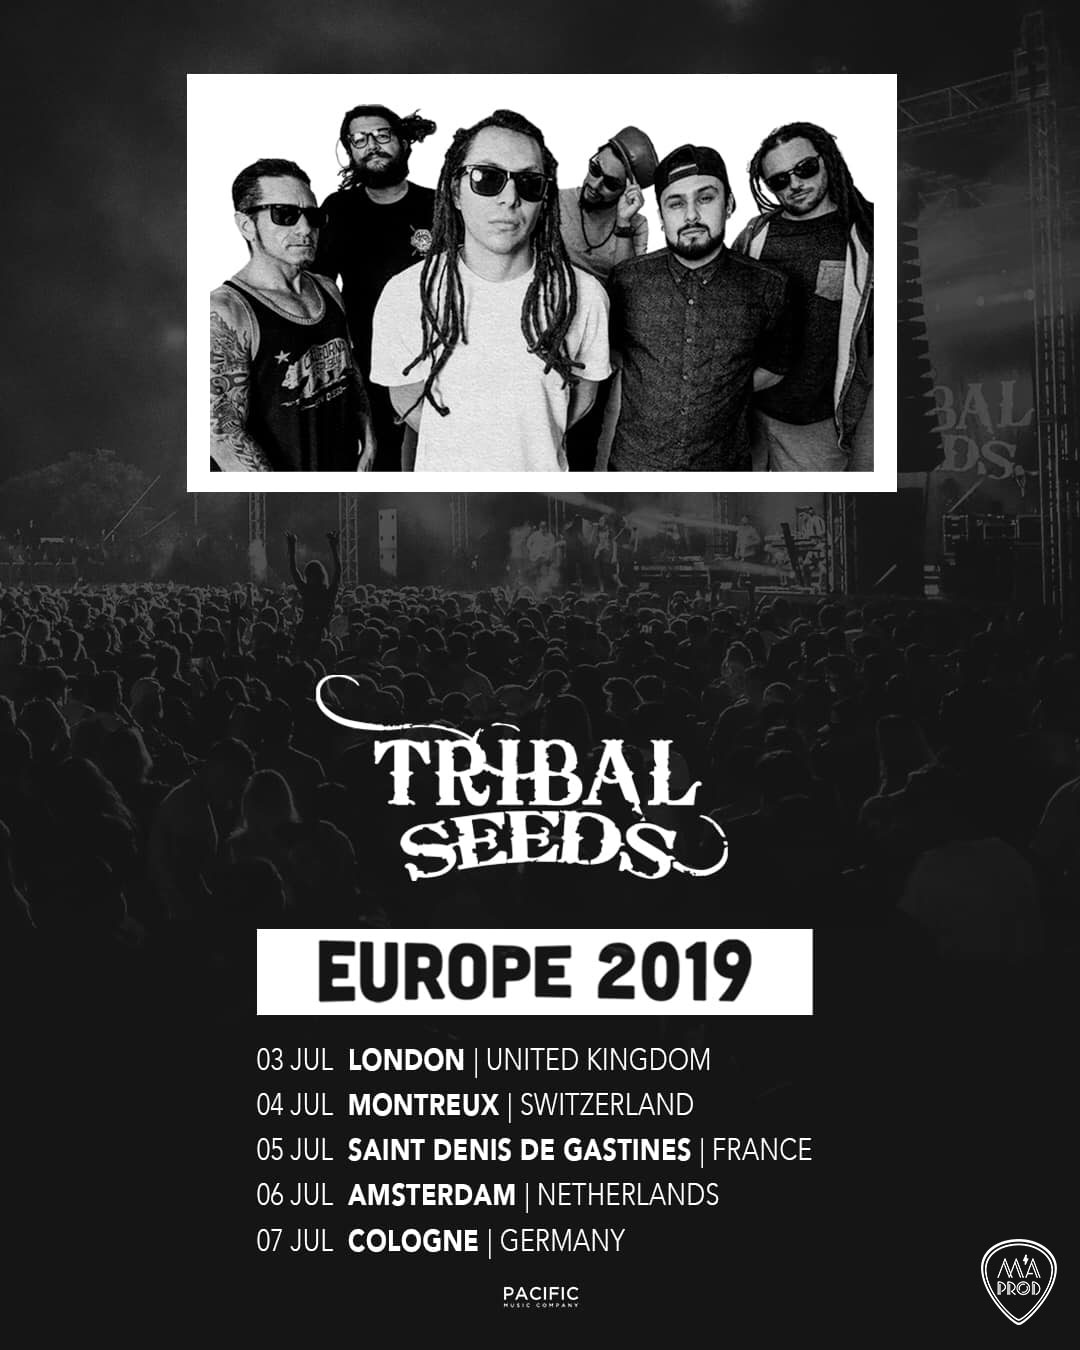 Tribal Seeds Europe Tour 2019 dates